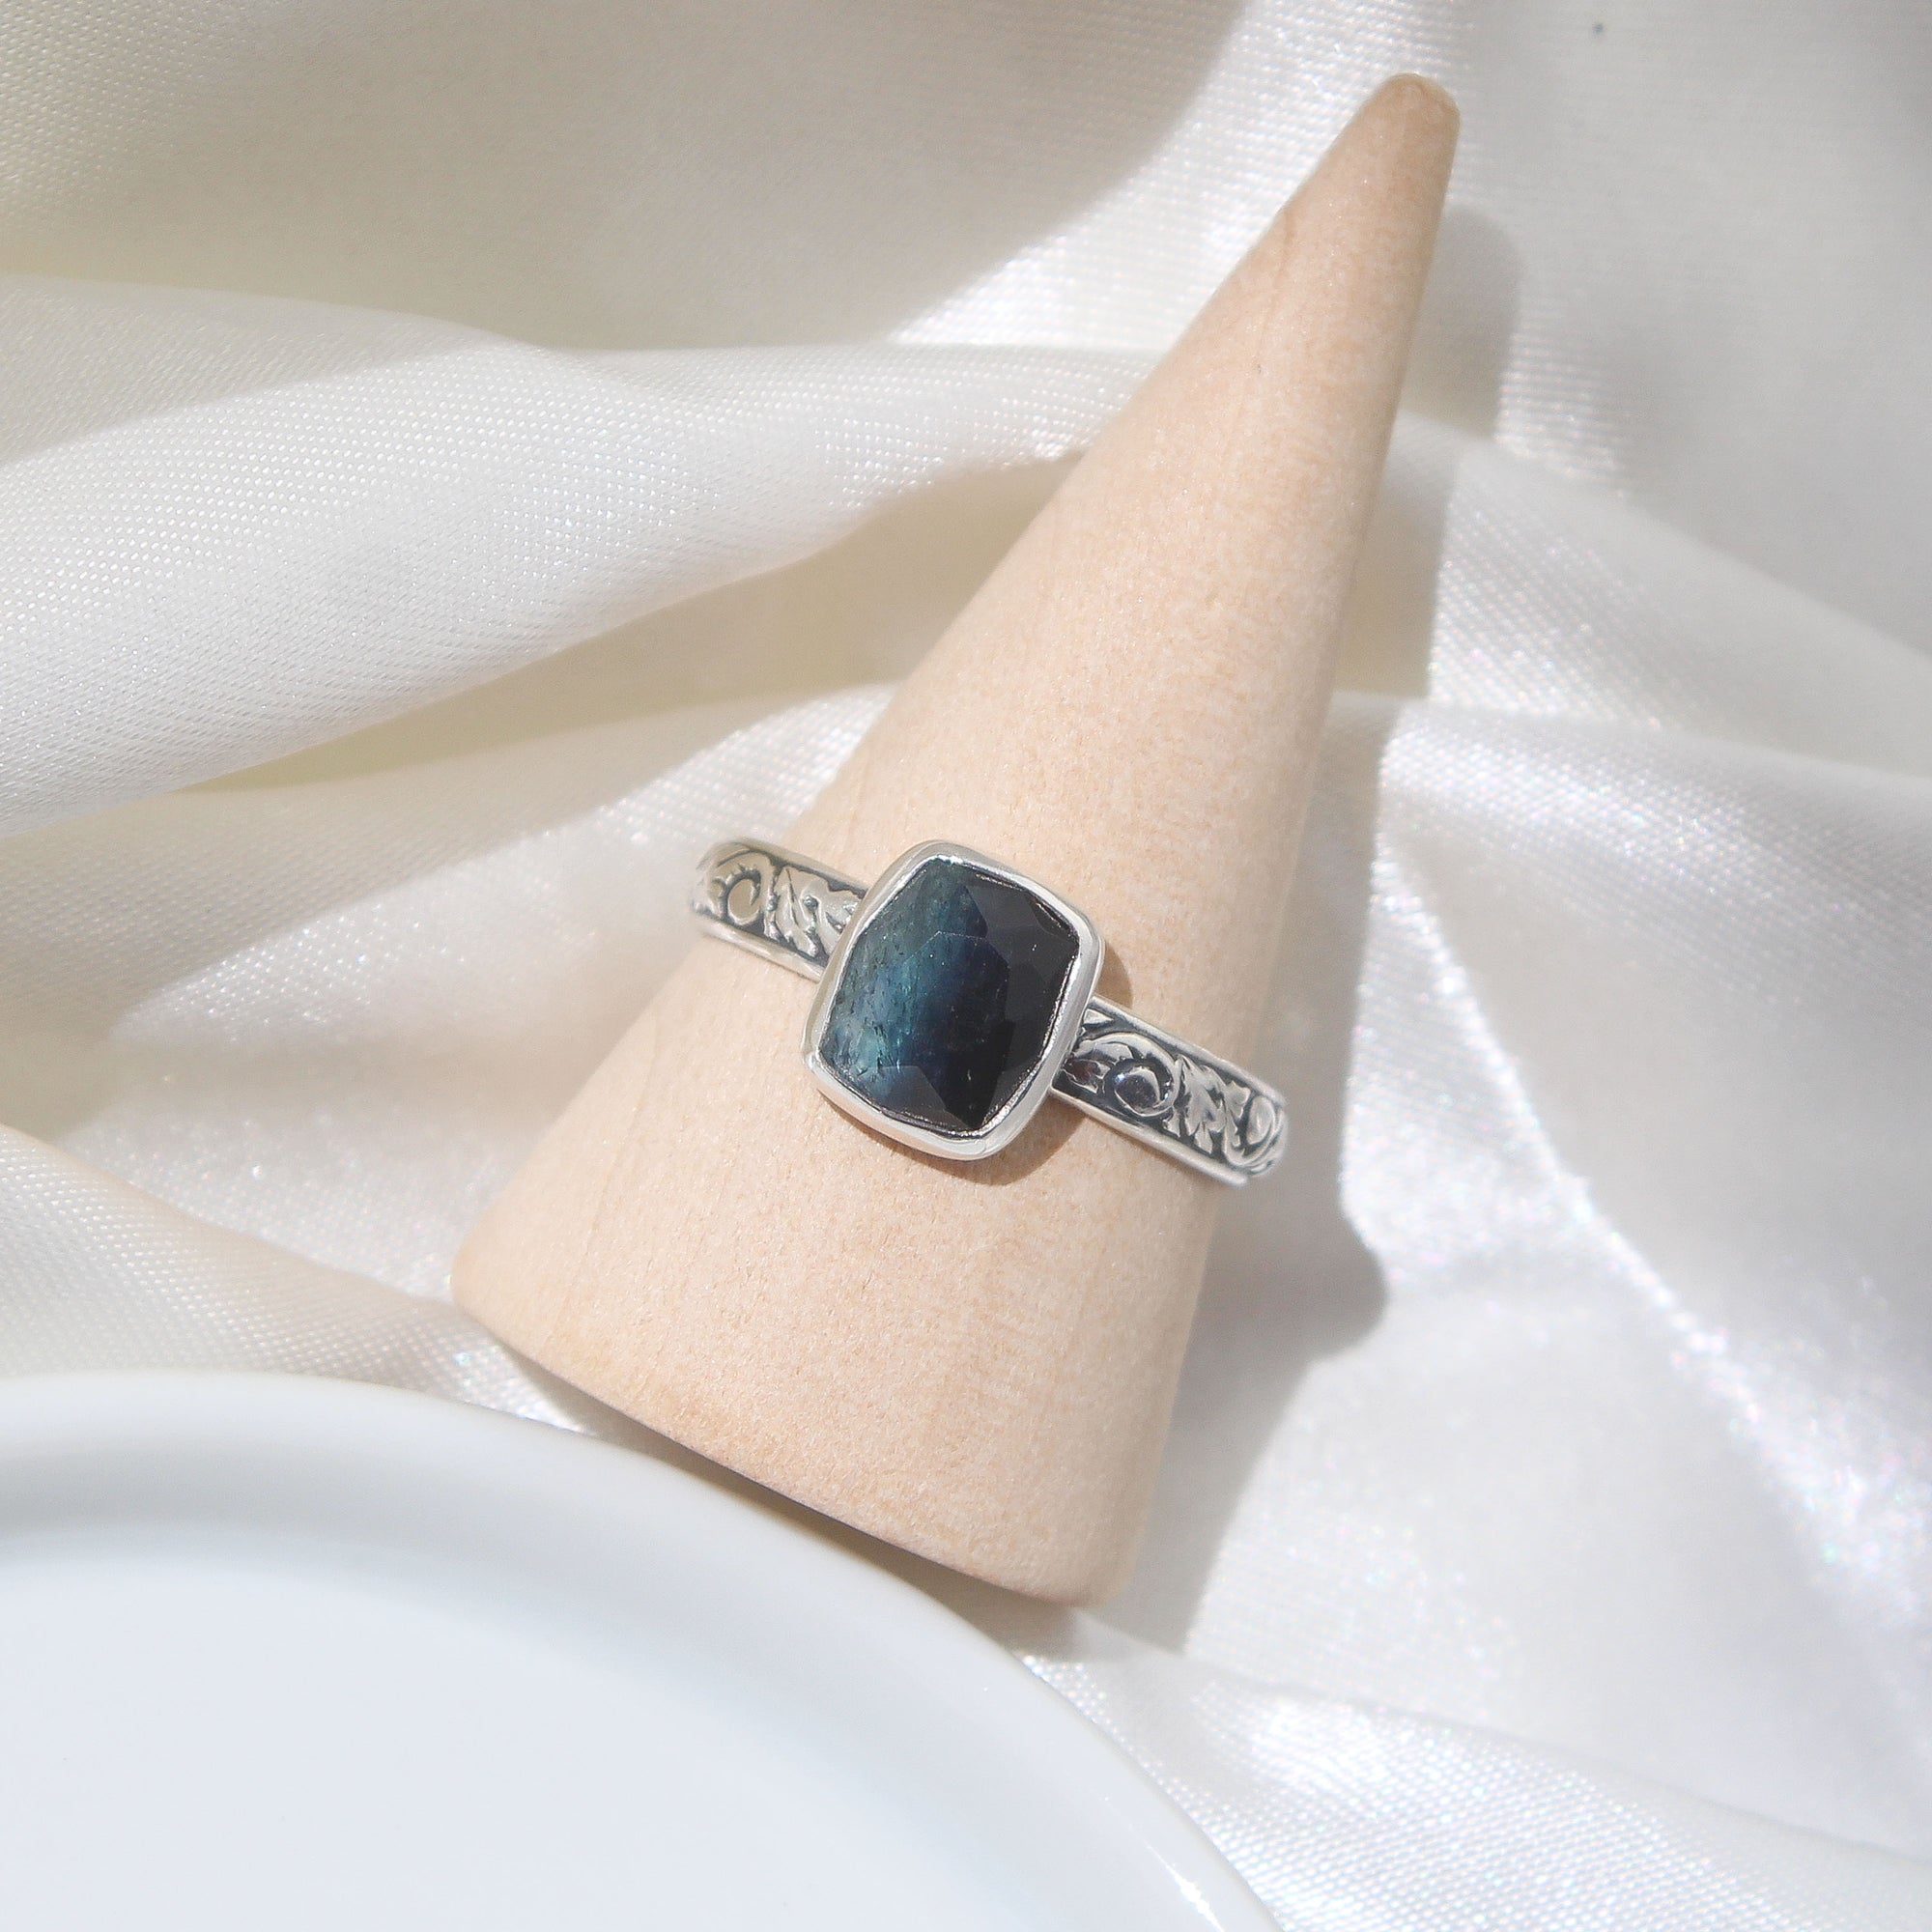 Blue Bi-Color Tourmaline Ring - Size 8.5